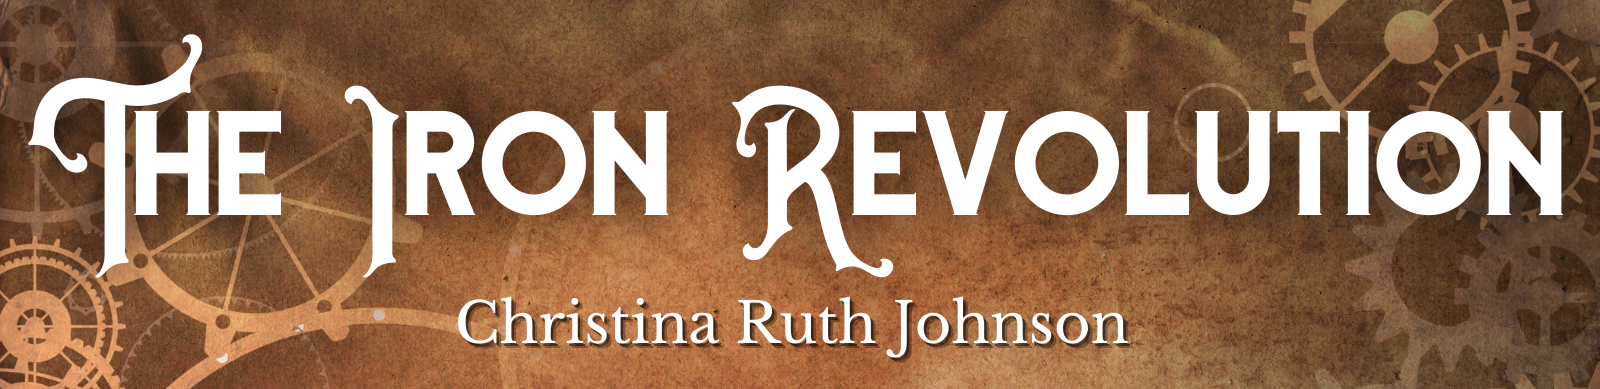 The Iron Revolution by Christina Ruth Johnson